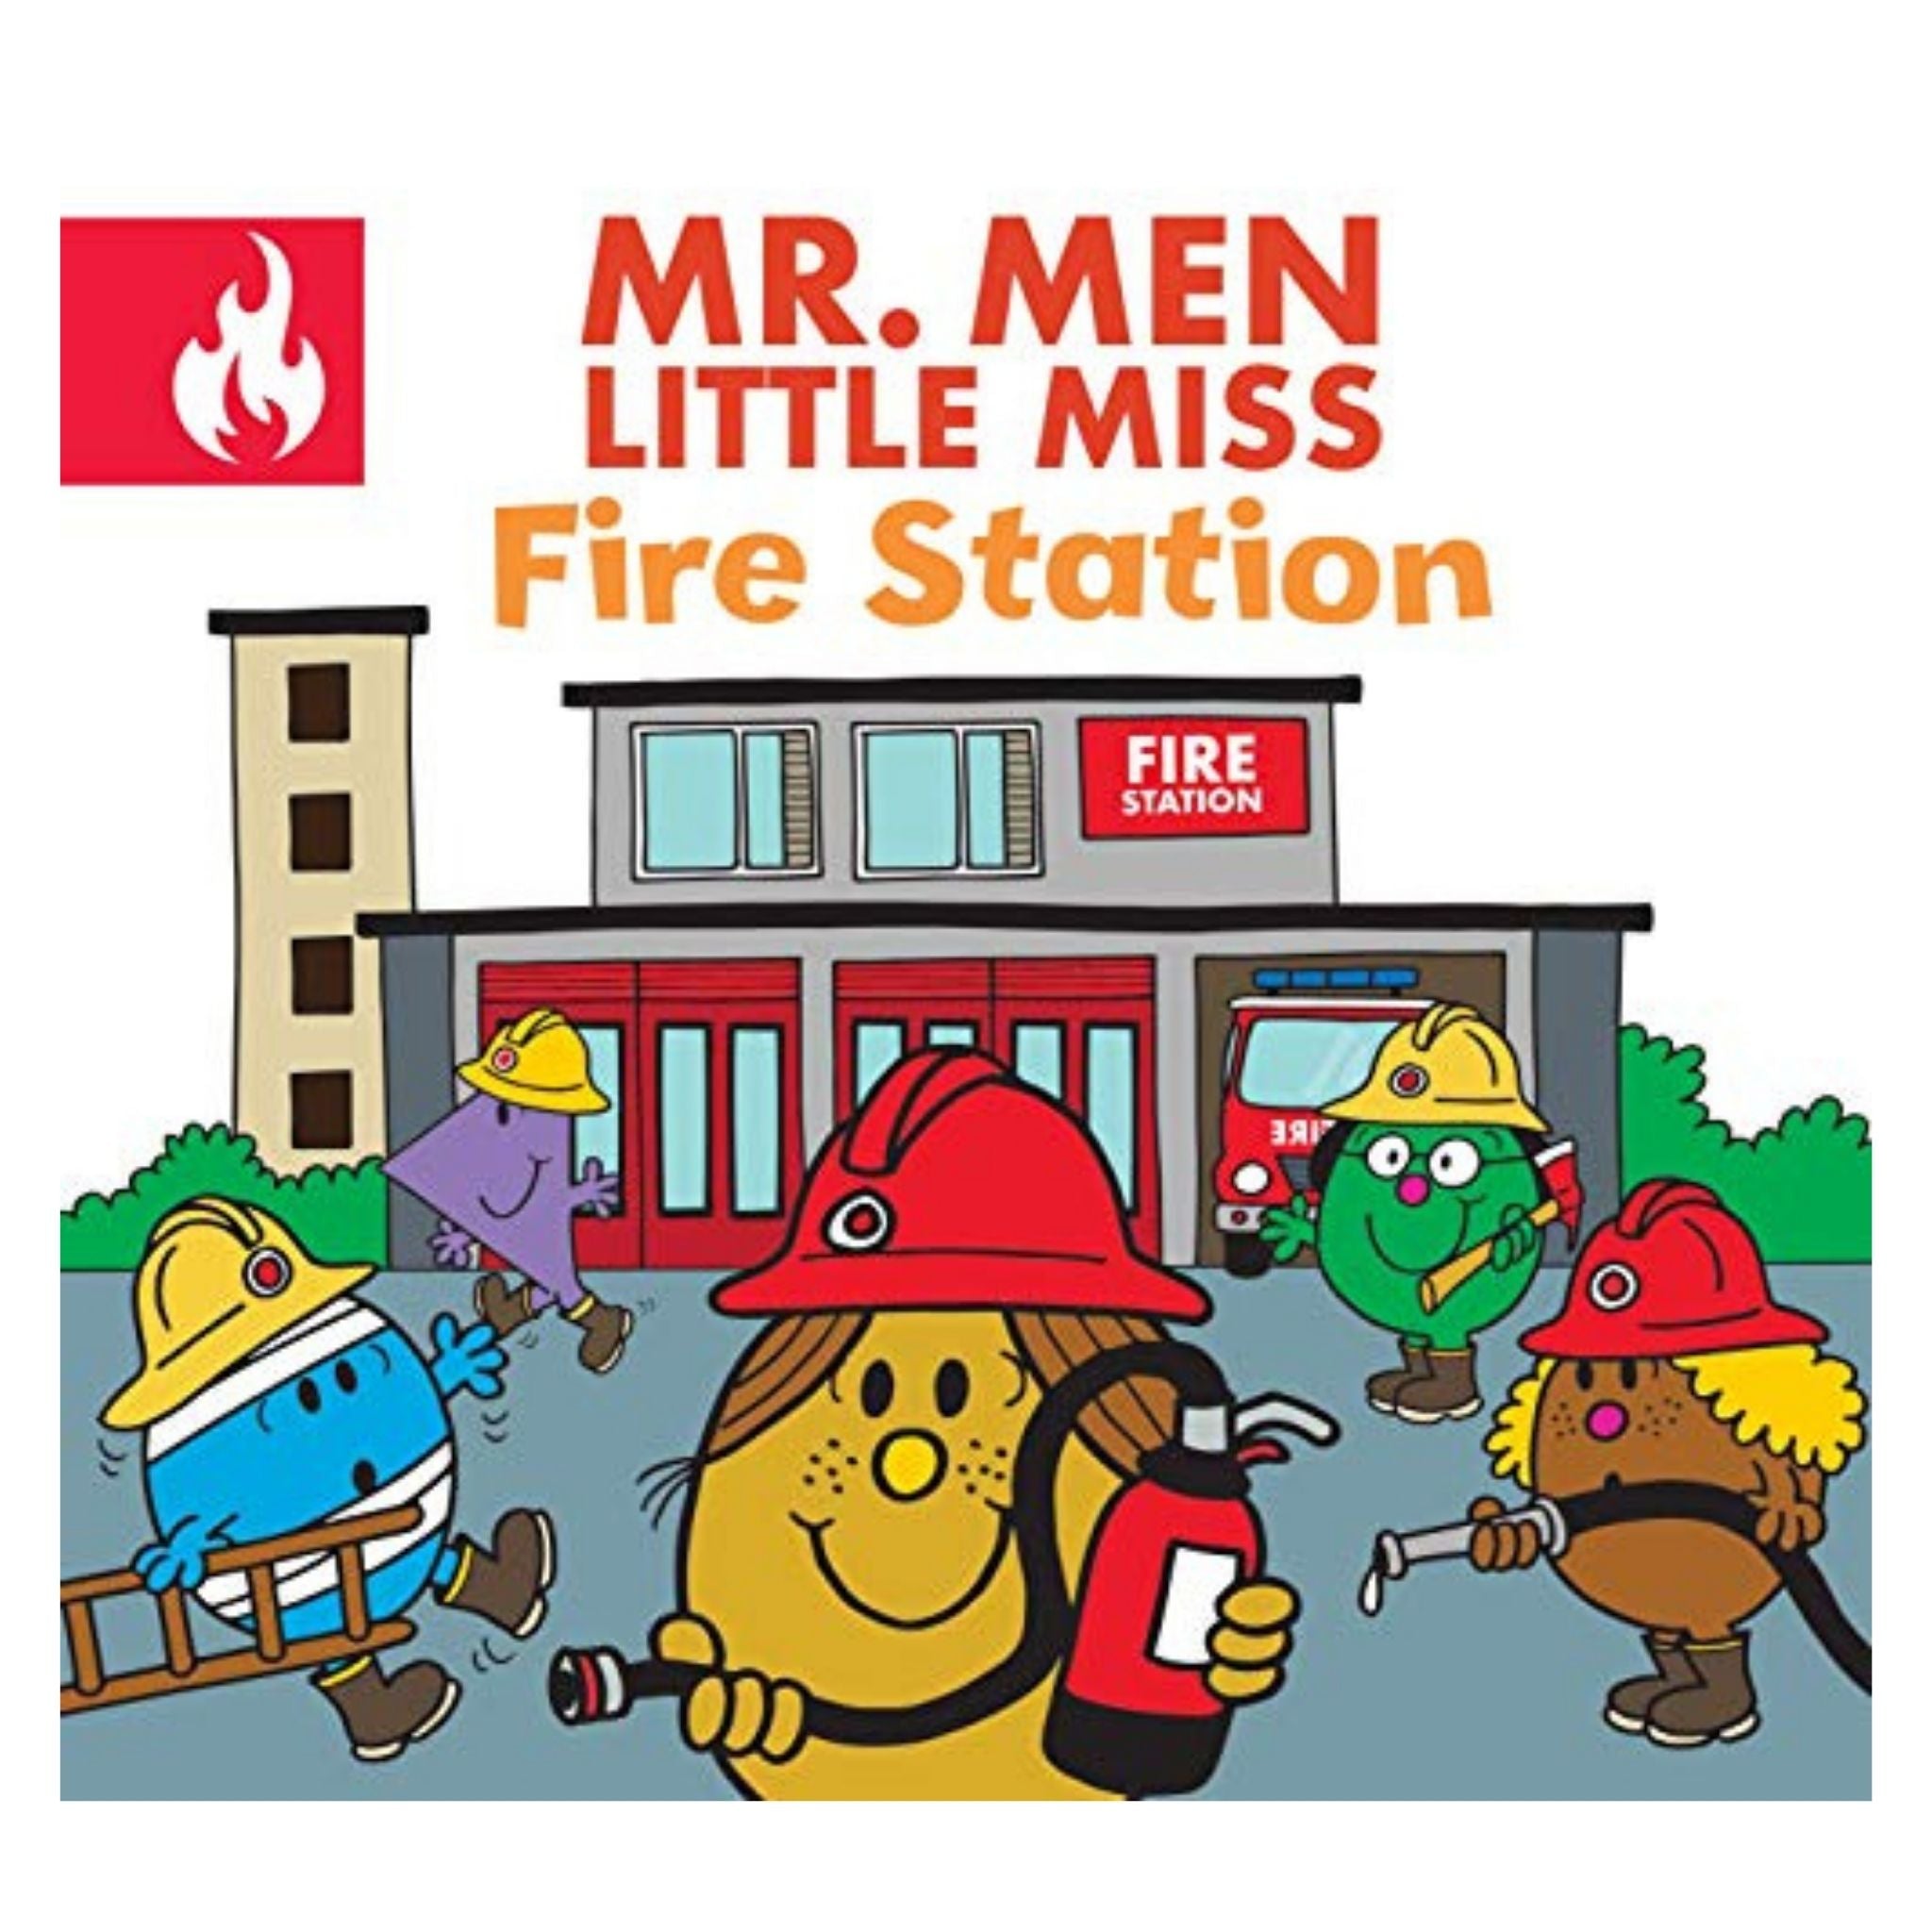 MR. MEN LITTLE MISS FIRE STATION